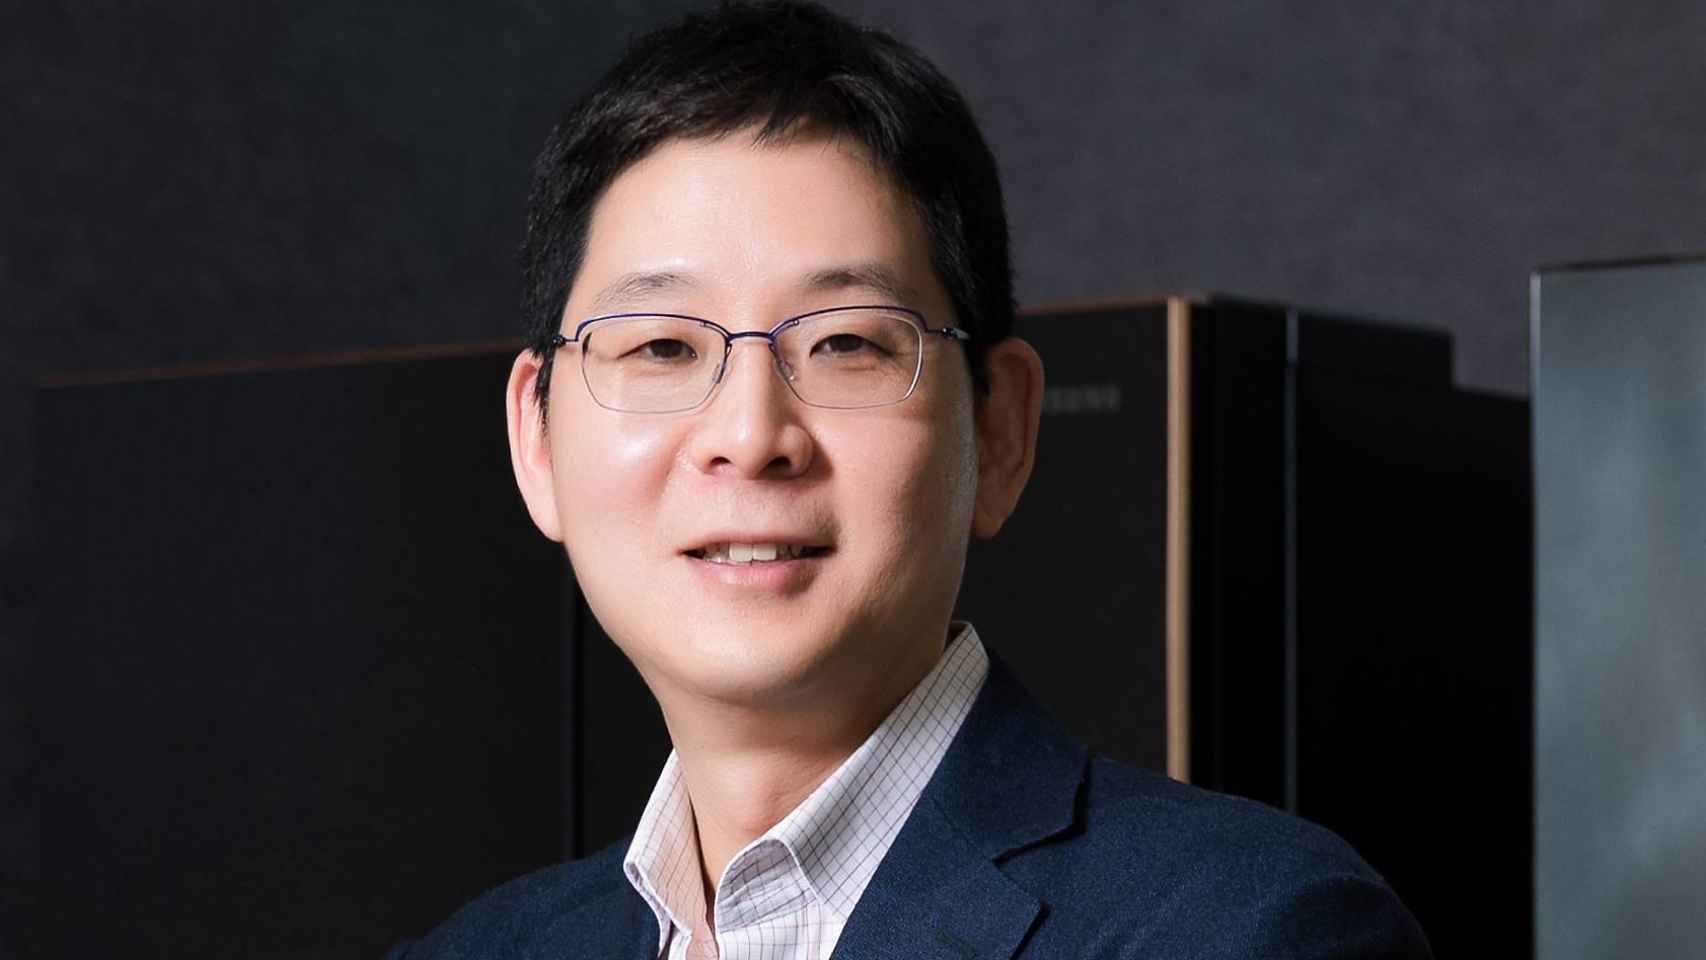 Chanwoo Park, vicepresidente corporativo de Samsung Electronics